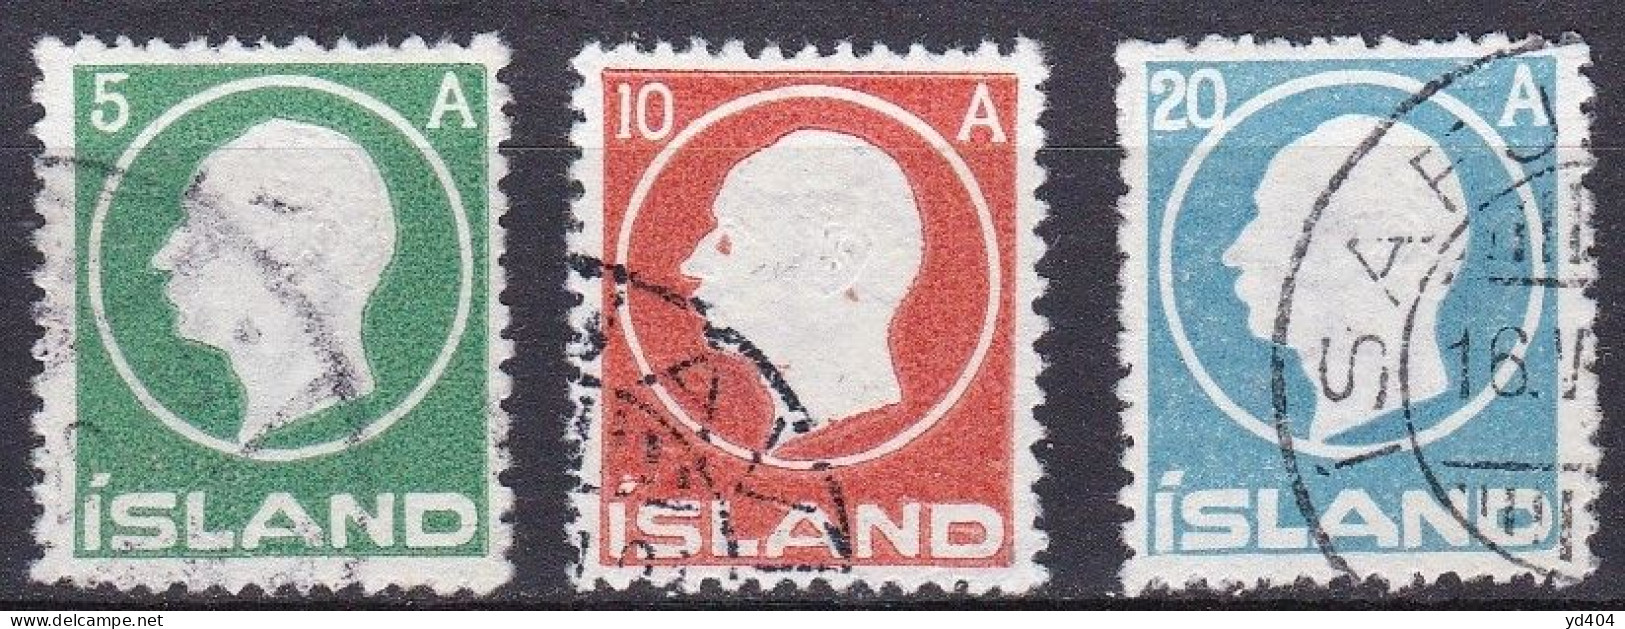 IS012F – ISLANDE – ICELAND – 1912 – KING FRDERIK VIII – SG # 102/4 USED 46 € - Gebraucht